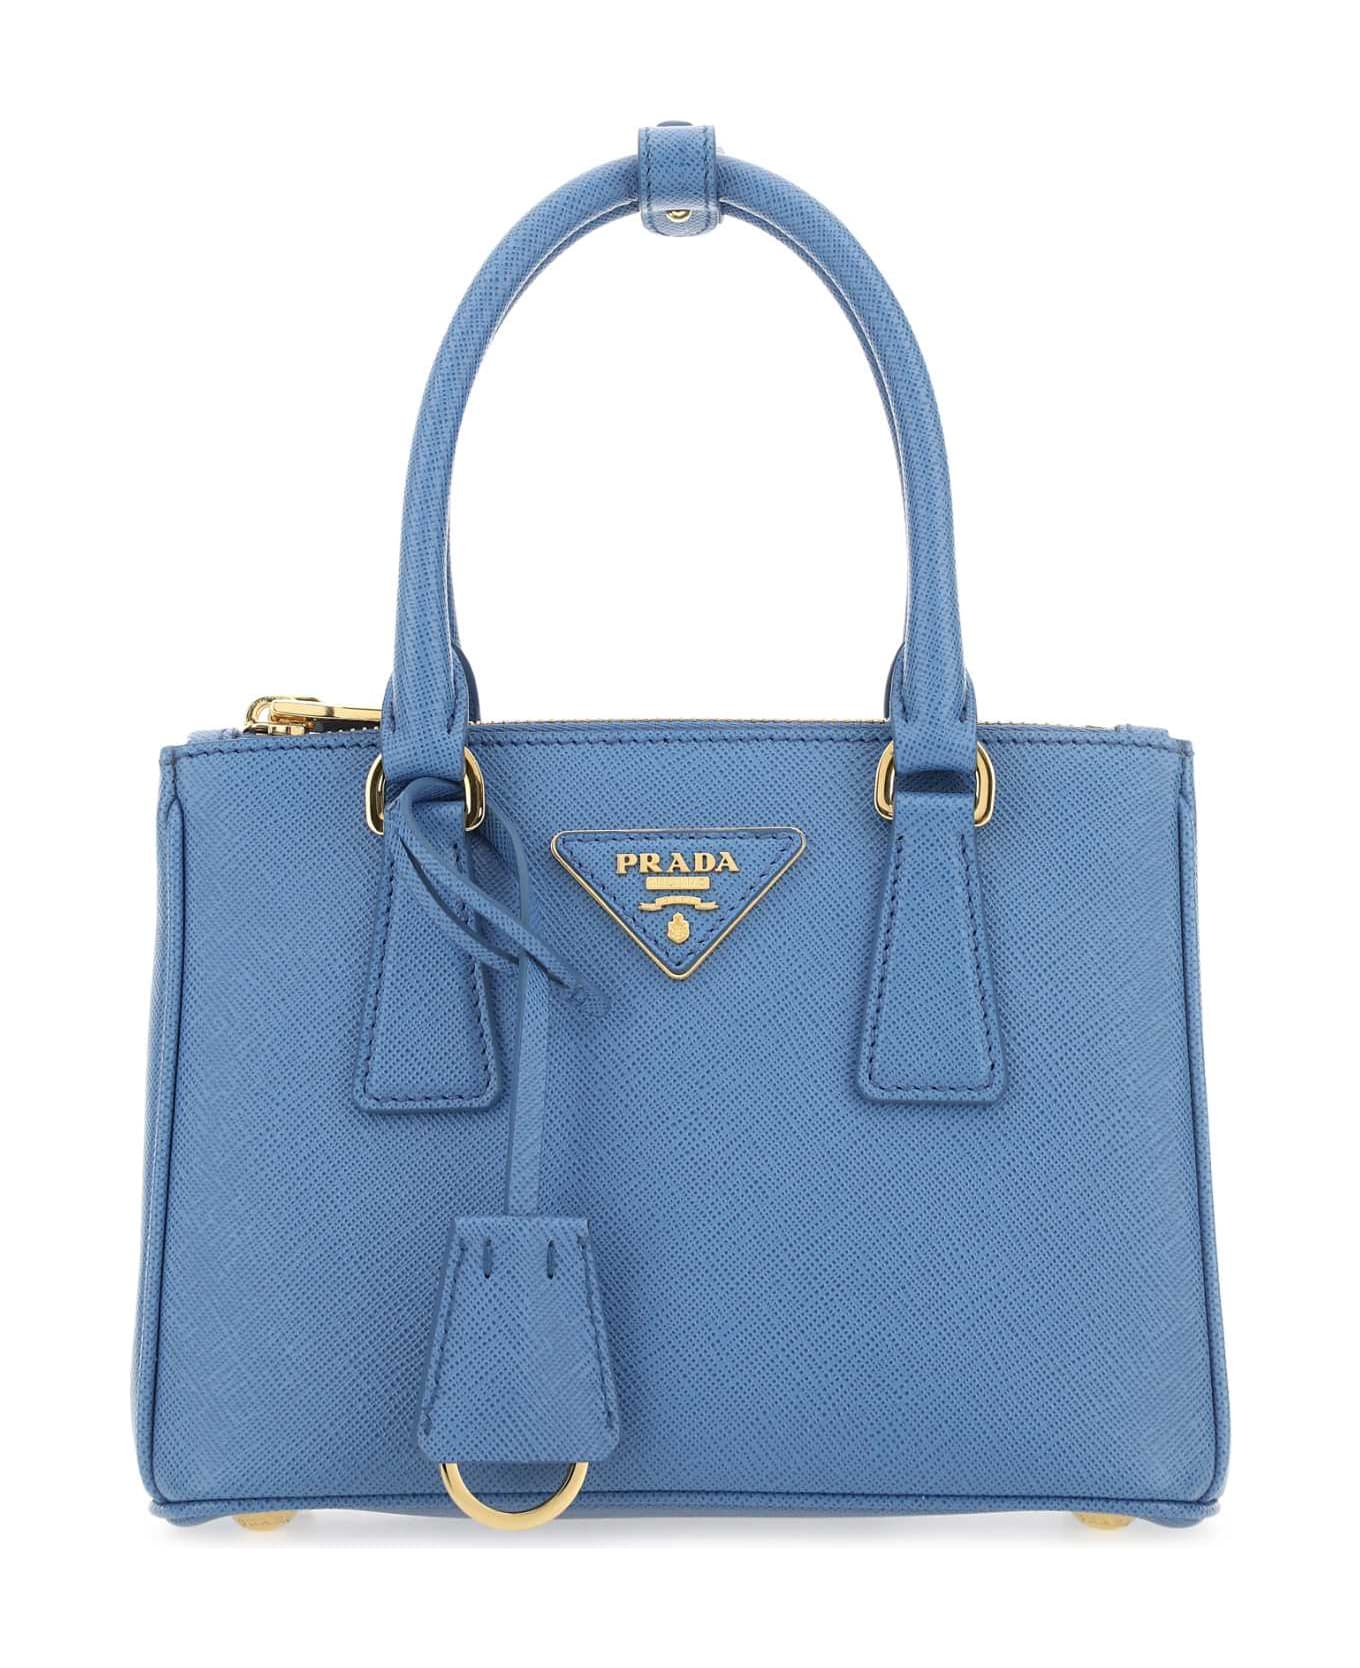 Prada Cerulean Blue Leather Handbag - Blue